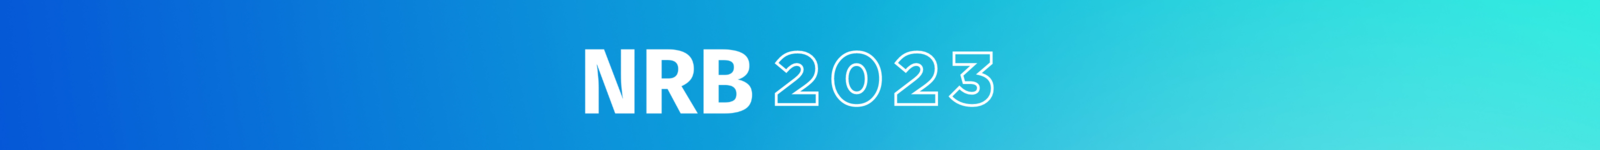 NRB 2023 International Christian Media Convention logo